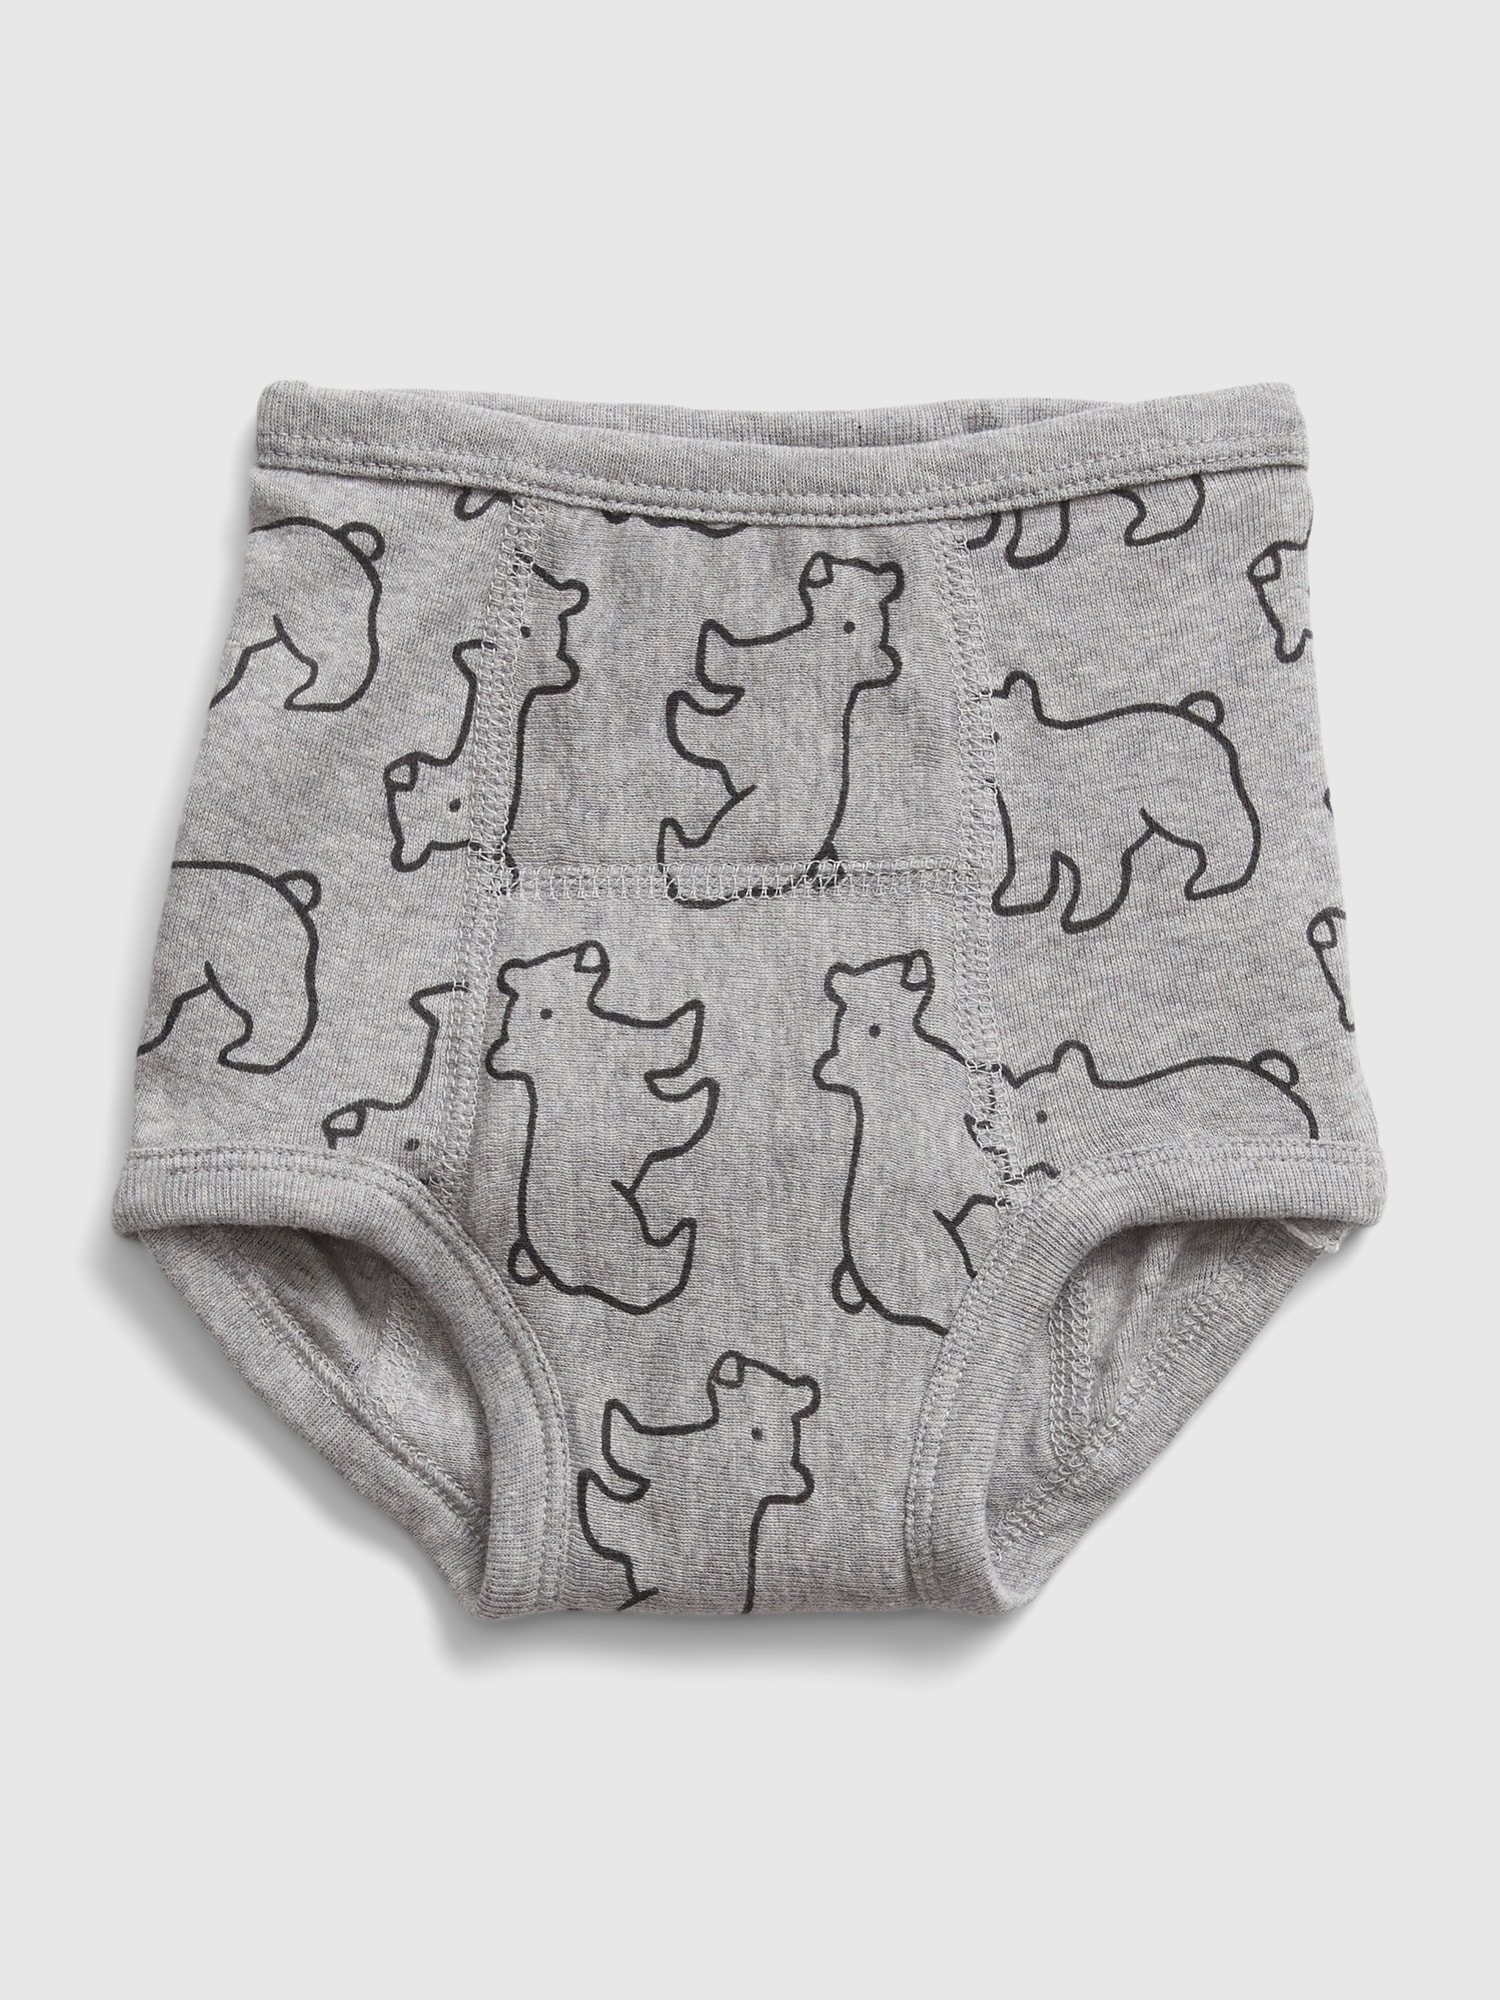 BIG ELEPHANT Baby Girls Training Pants Underwear - 100% Cotton